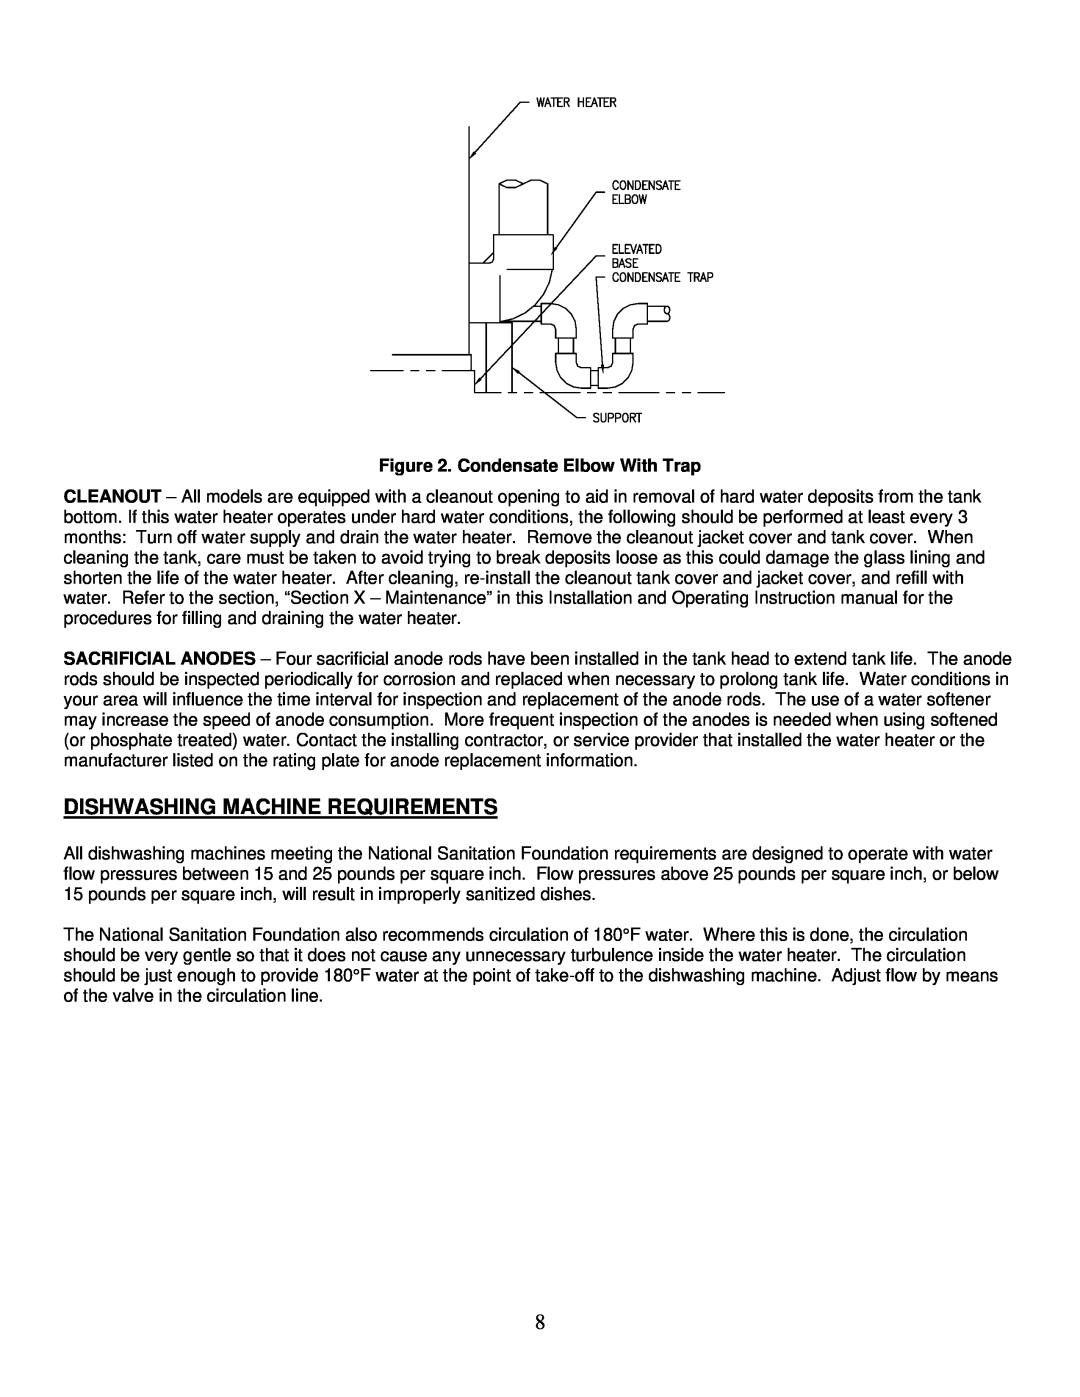 Bradford-White Corp 238-48384-00F warranty Dishwashing Machine Requirements, Condensate Elbow With Trap 